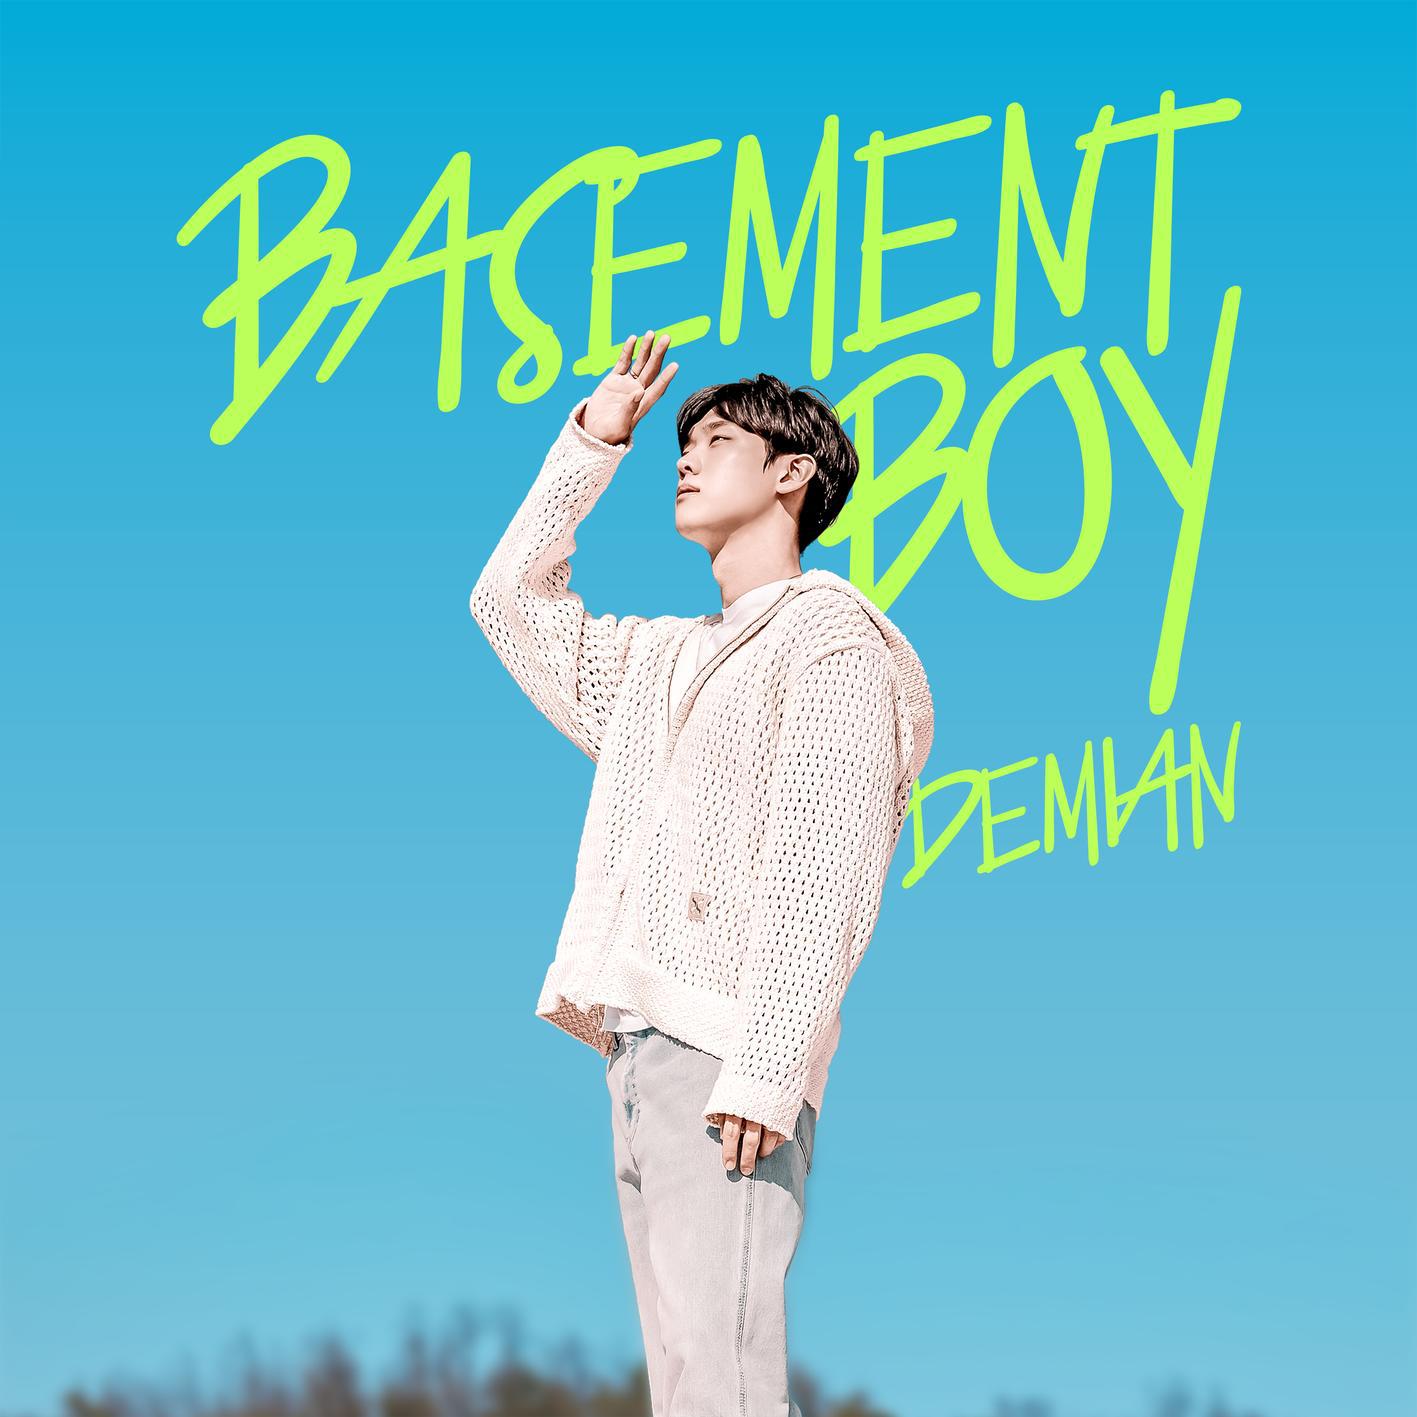 BASEMENT BOY歌词 歌手DEMIAN-专辑BASEMENT BOY-单曲《BASEMENT BOY》LRC歌词下载